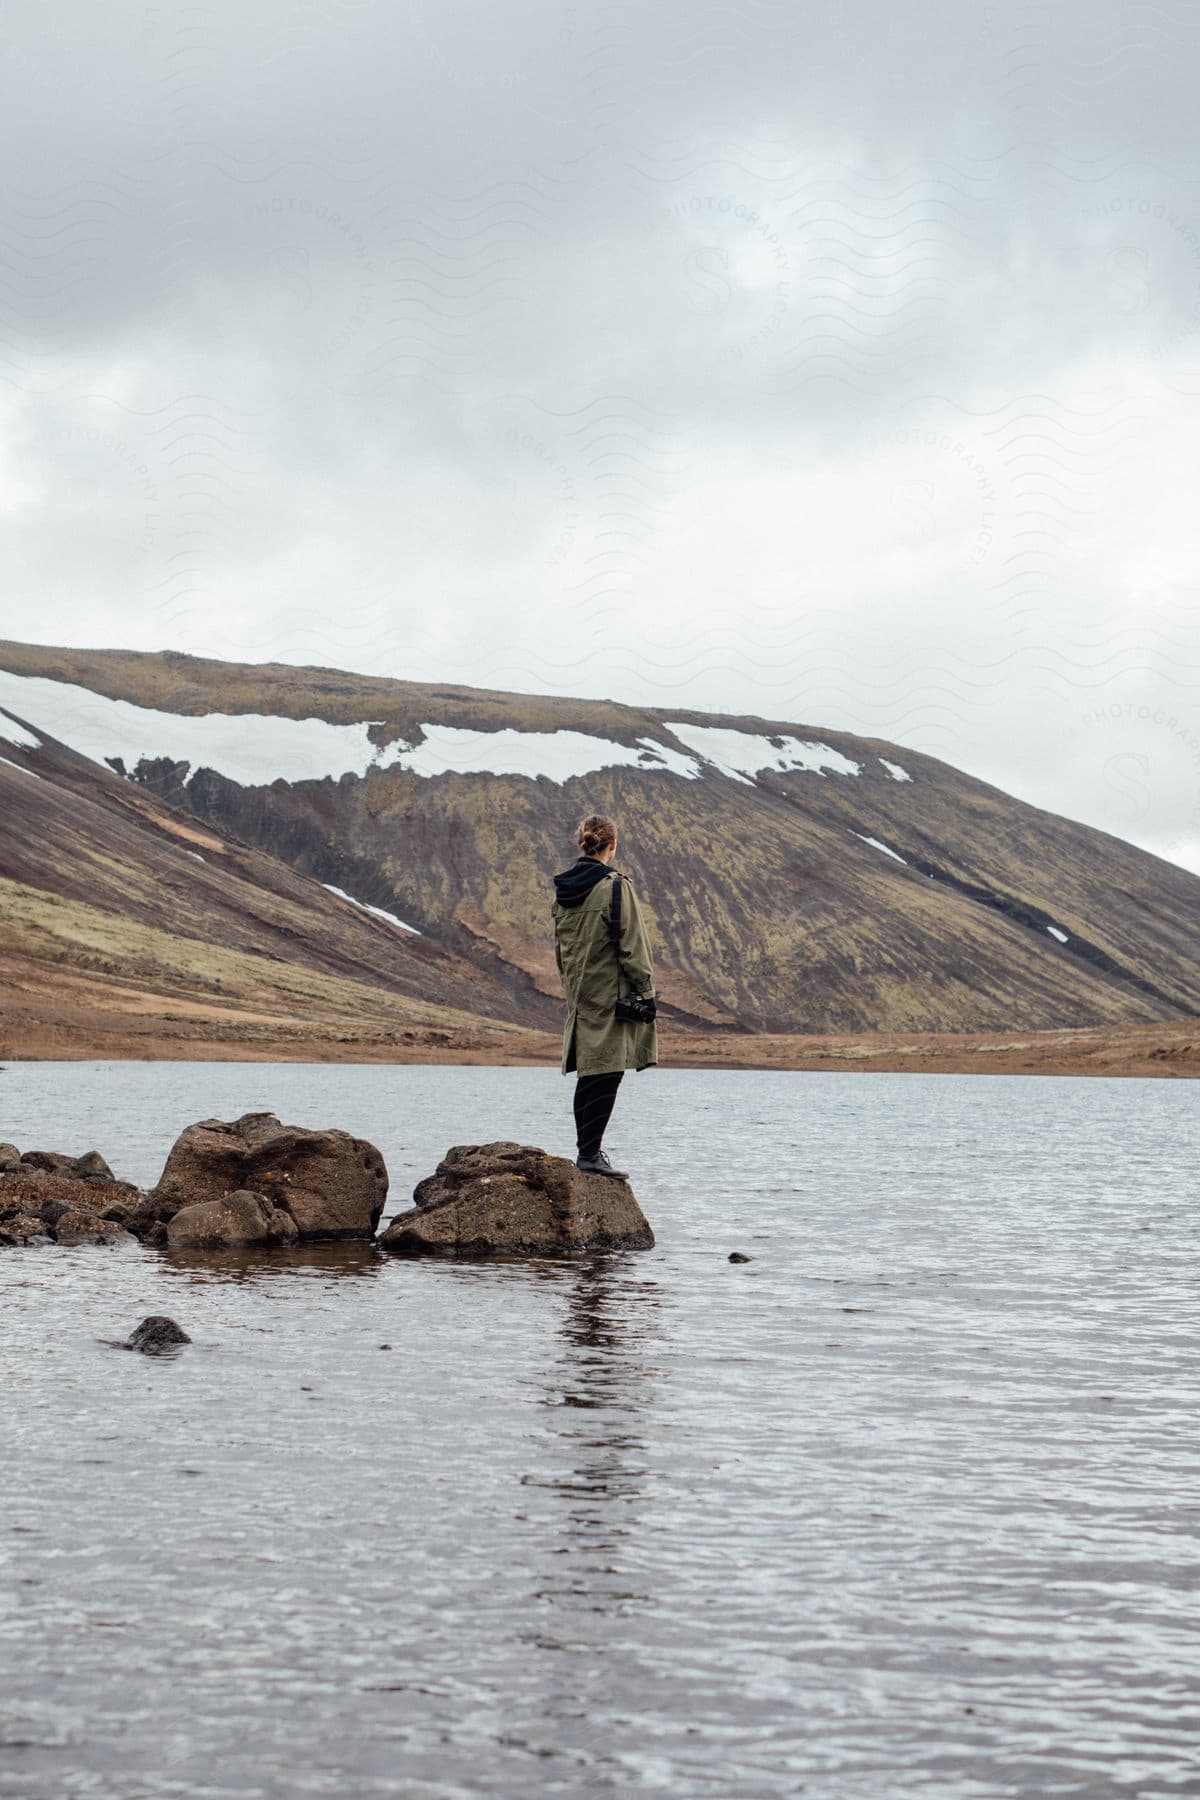 A female standing on a rock in a lake near a hillside